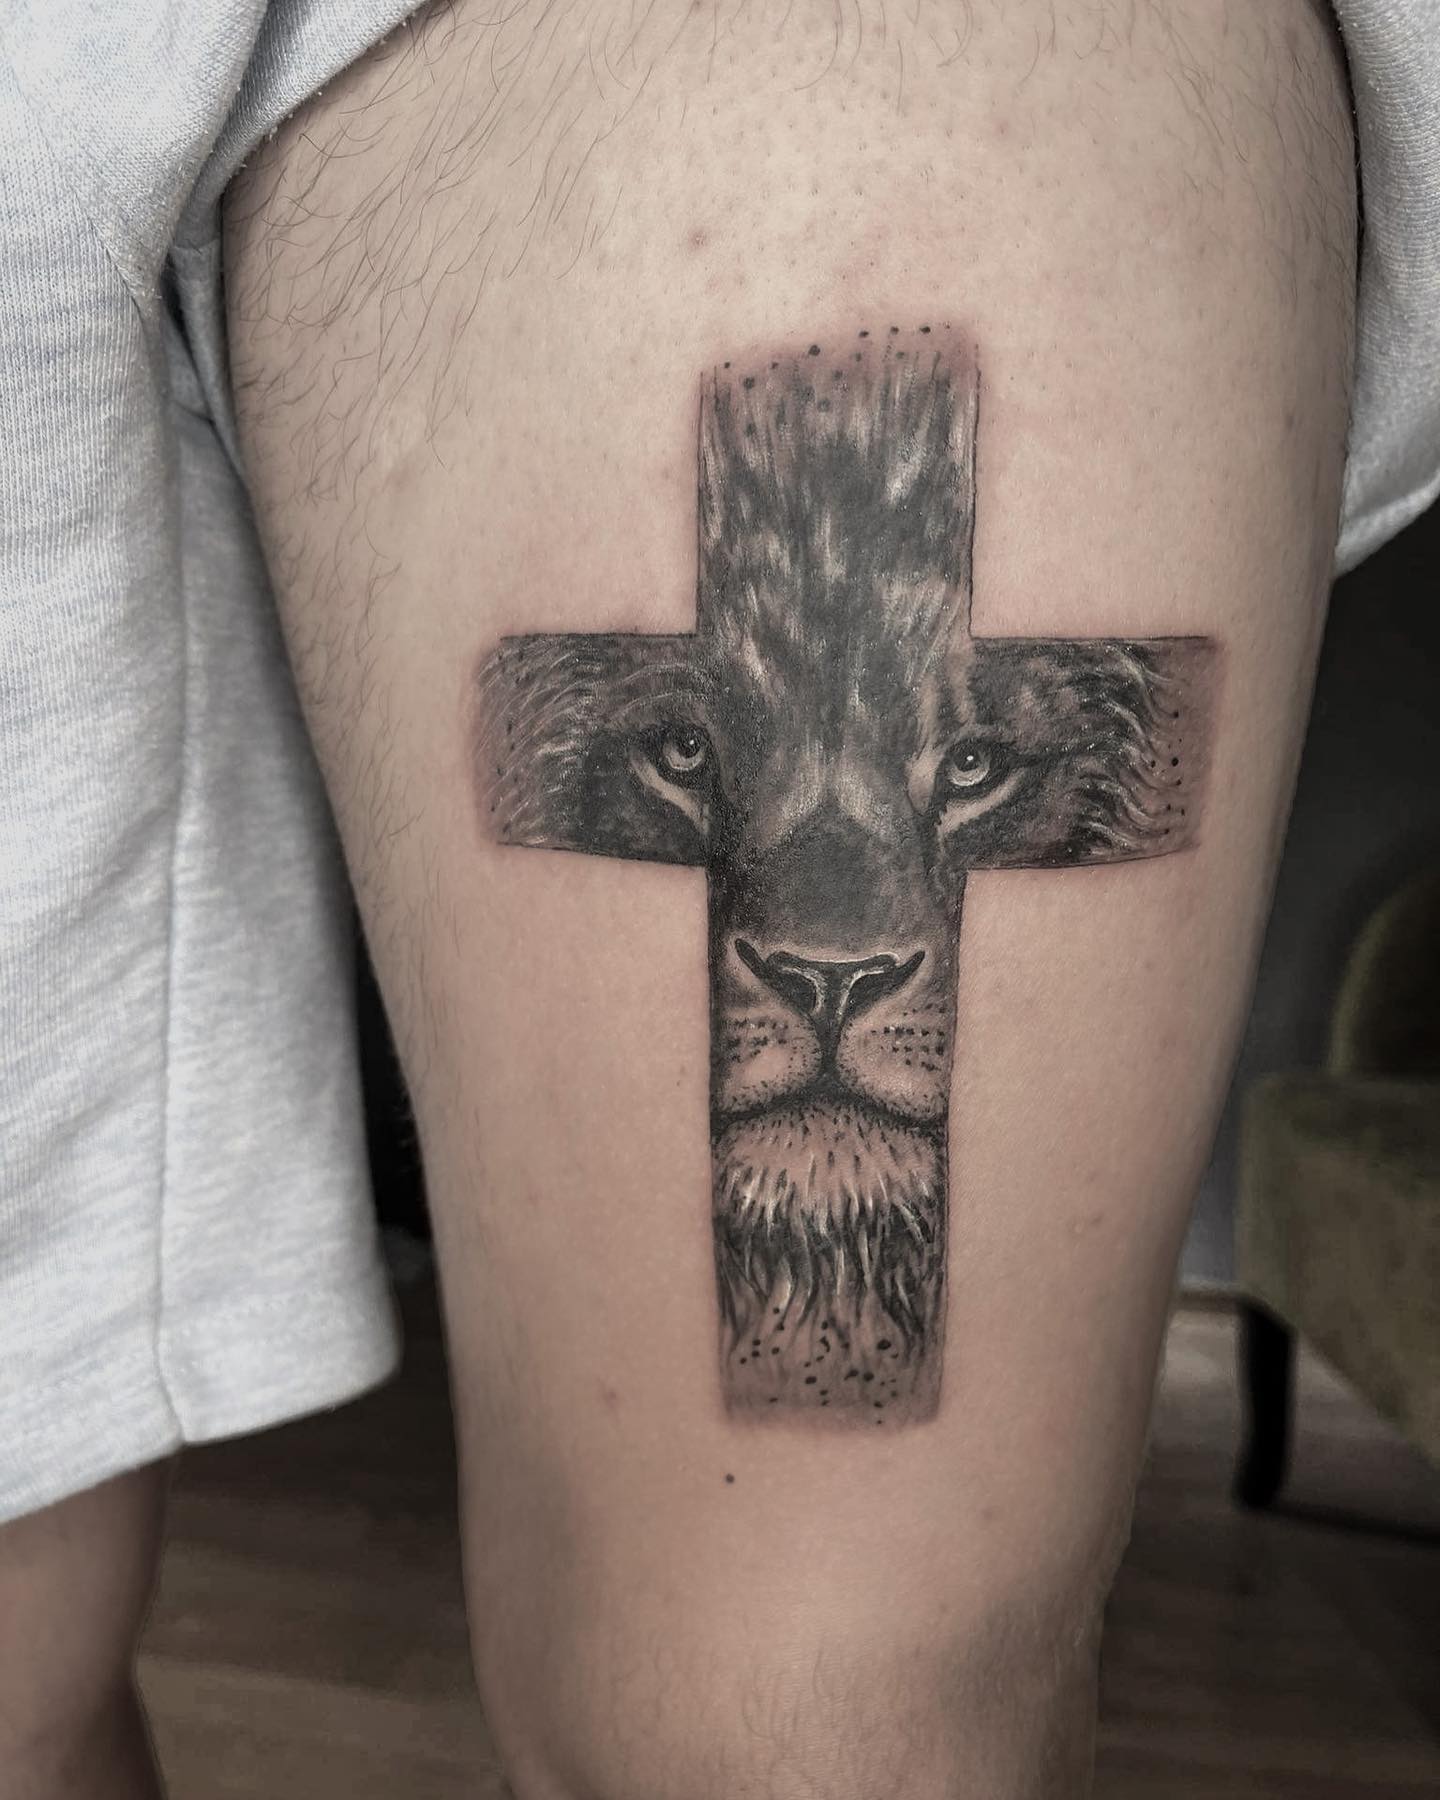 Tatuaje Realista de Cruz en la Espalda